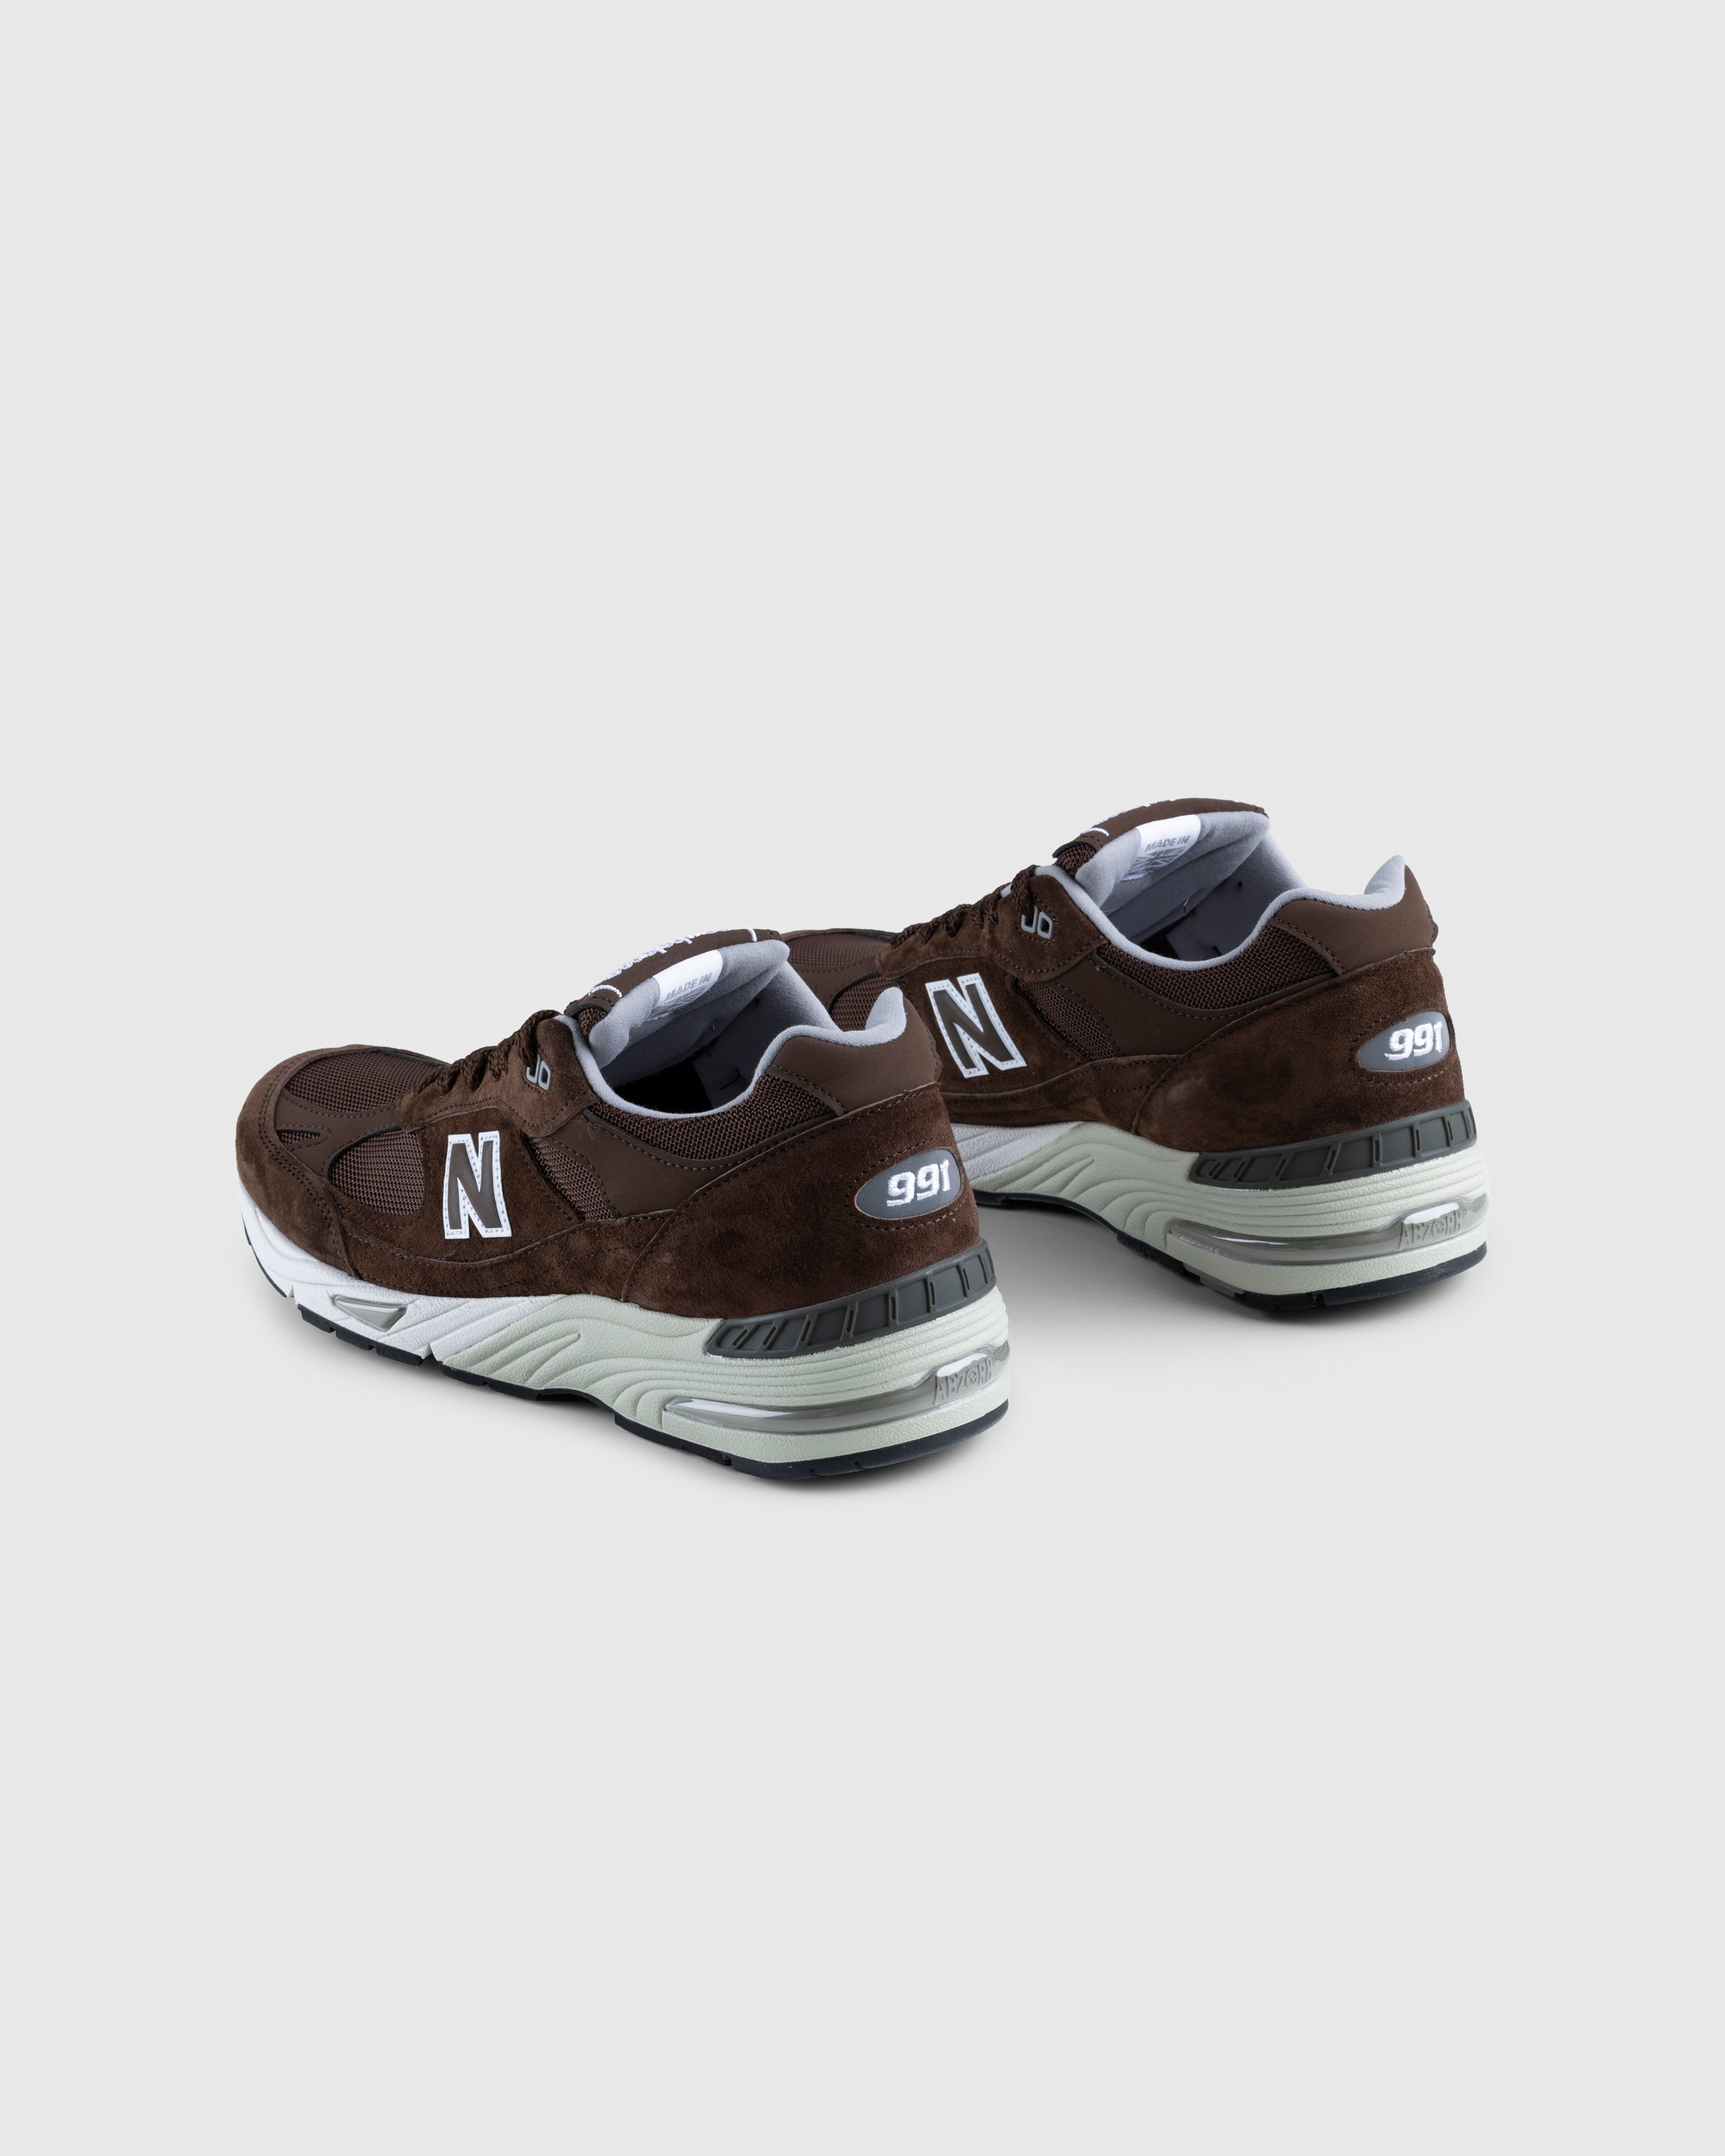 New Balance - M991BGW Brown - Footwear - Brown - Image 4